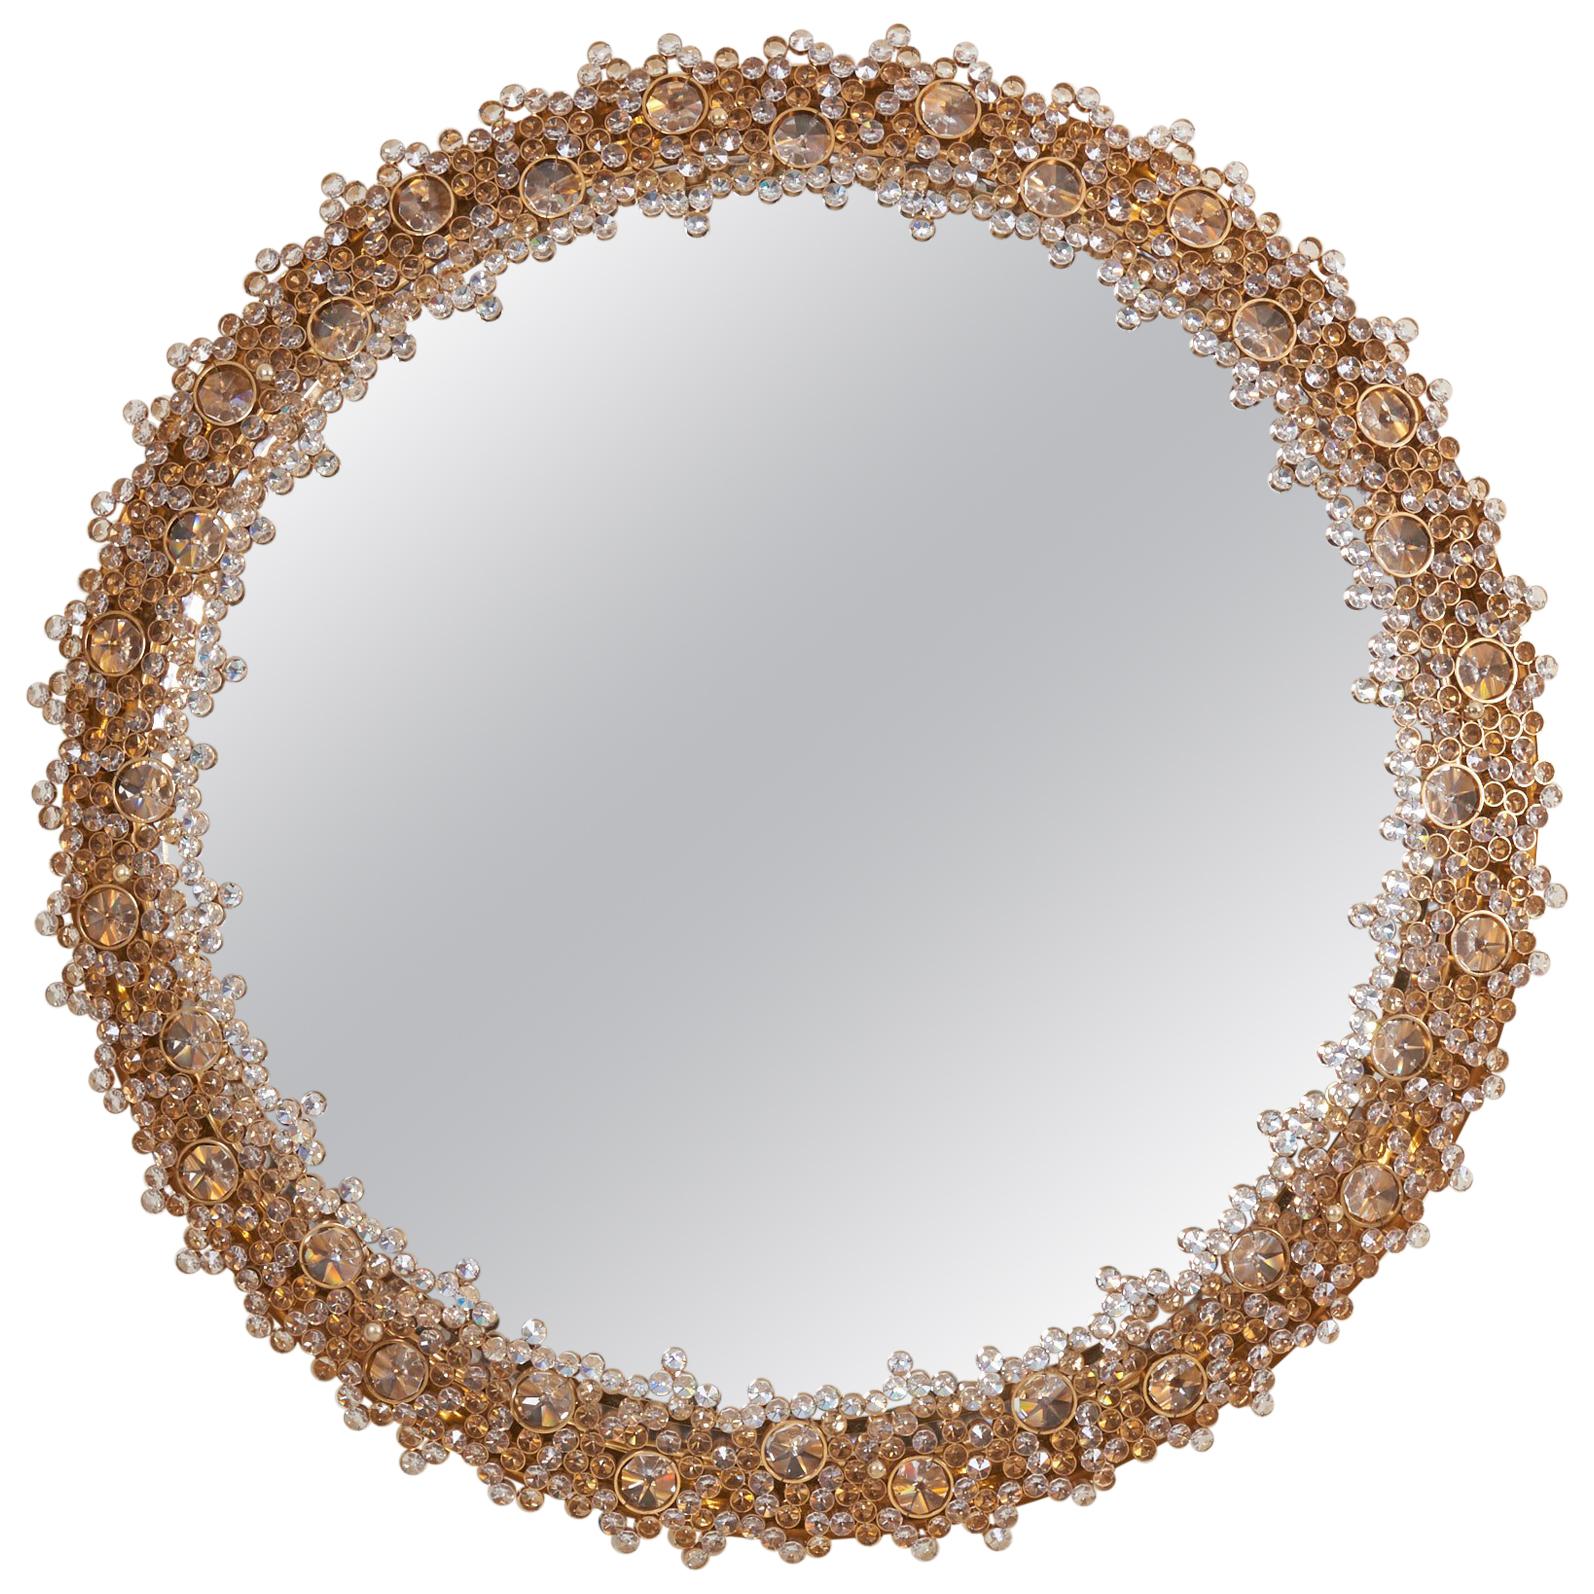 Outstanding Round Illuminated Palwa Crystal Glass Mirror, Model S104W